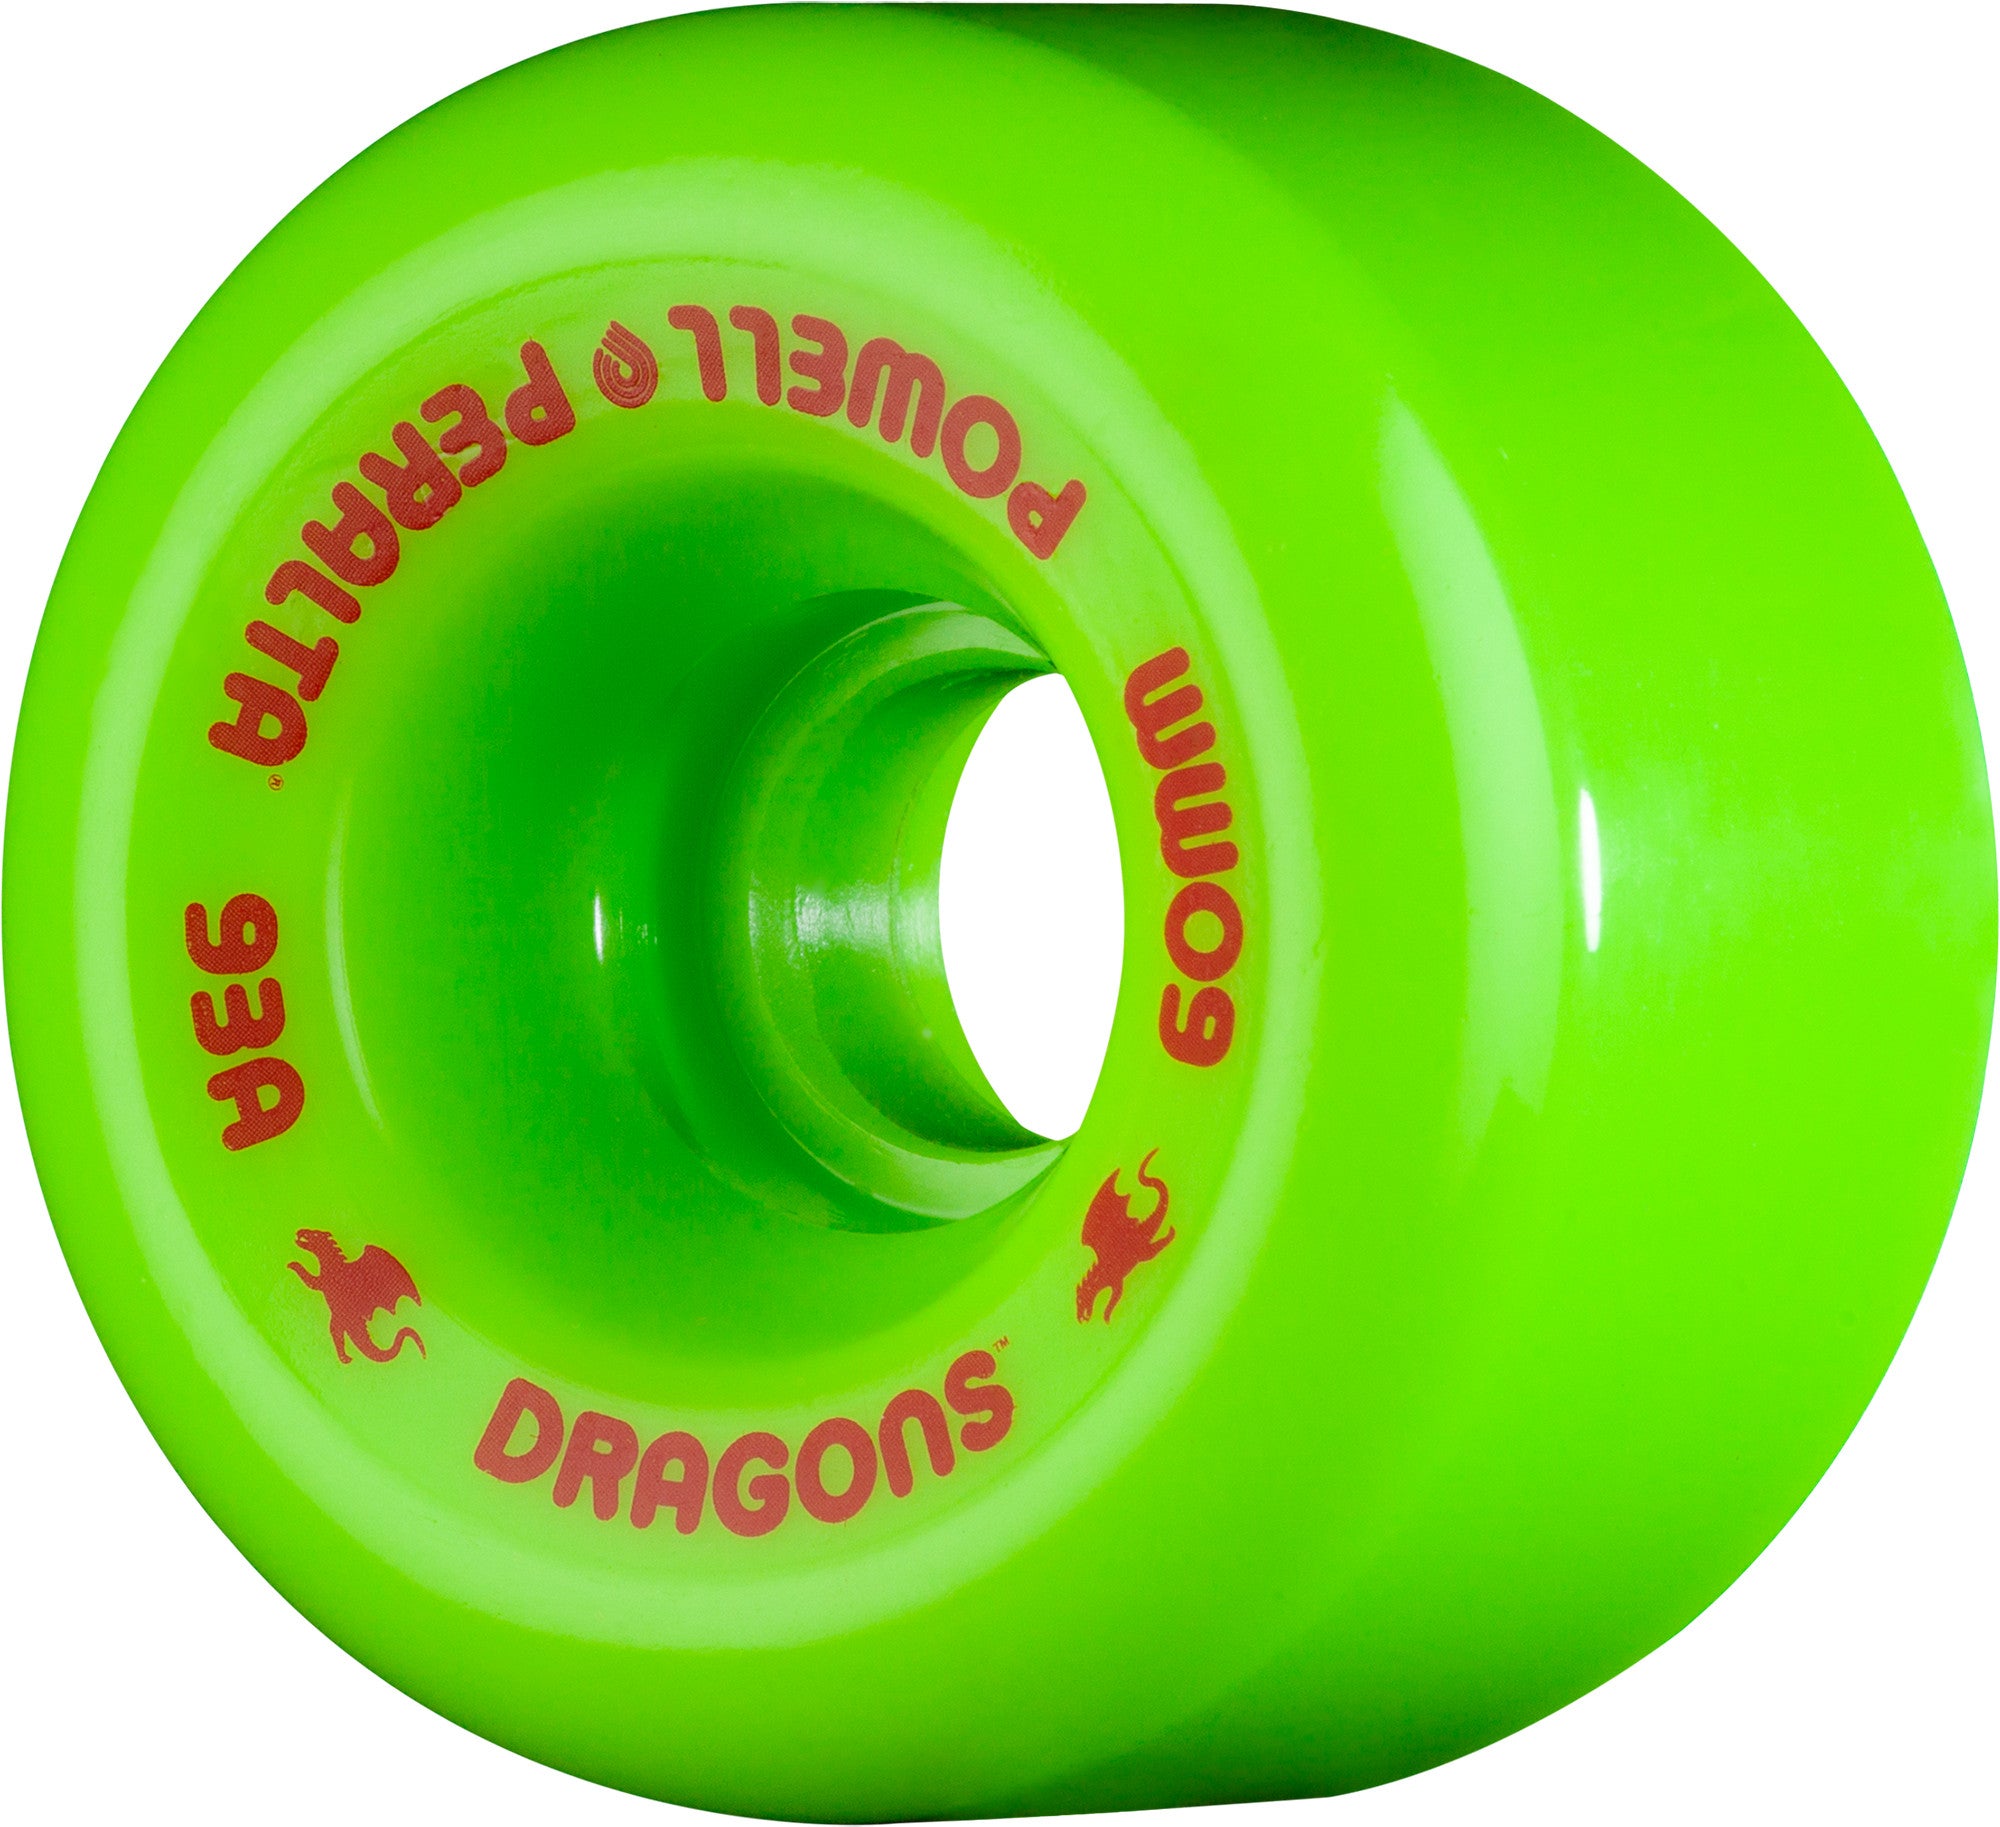 SALE - Powell Peralta Dragon Formula Skateboard Wheels 60mm x 39mm 93A 4pk Green